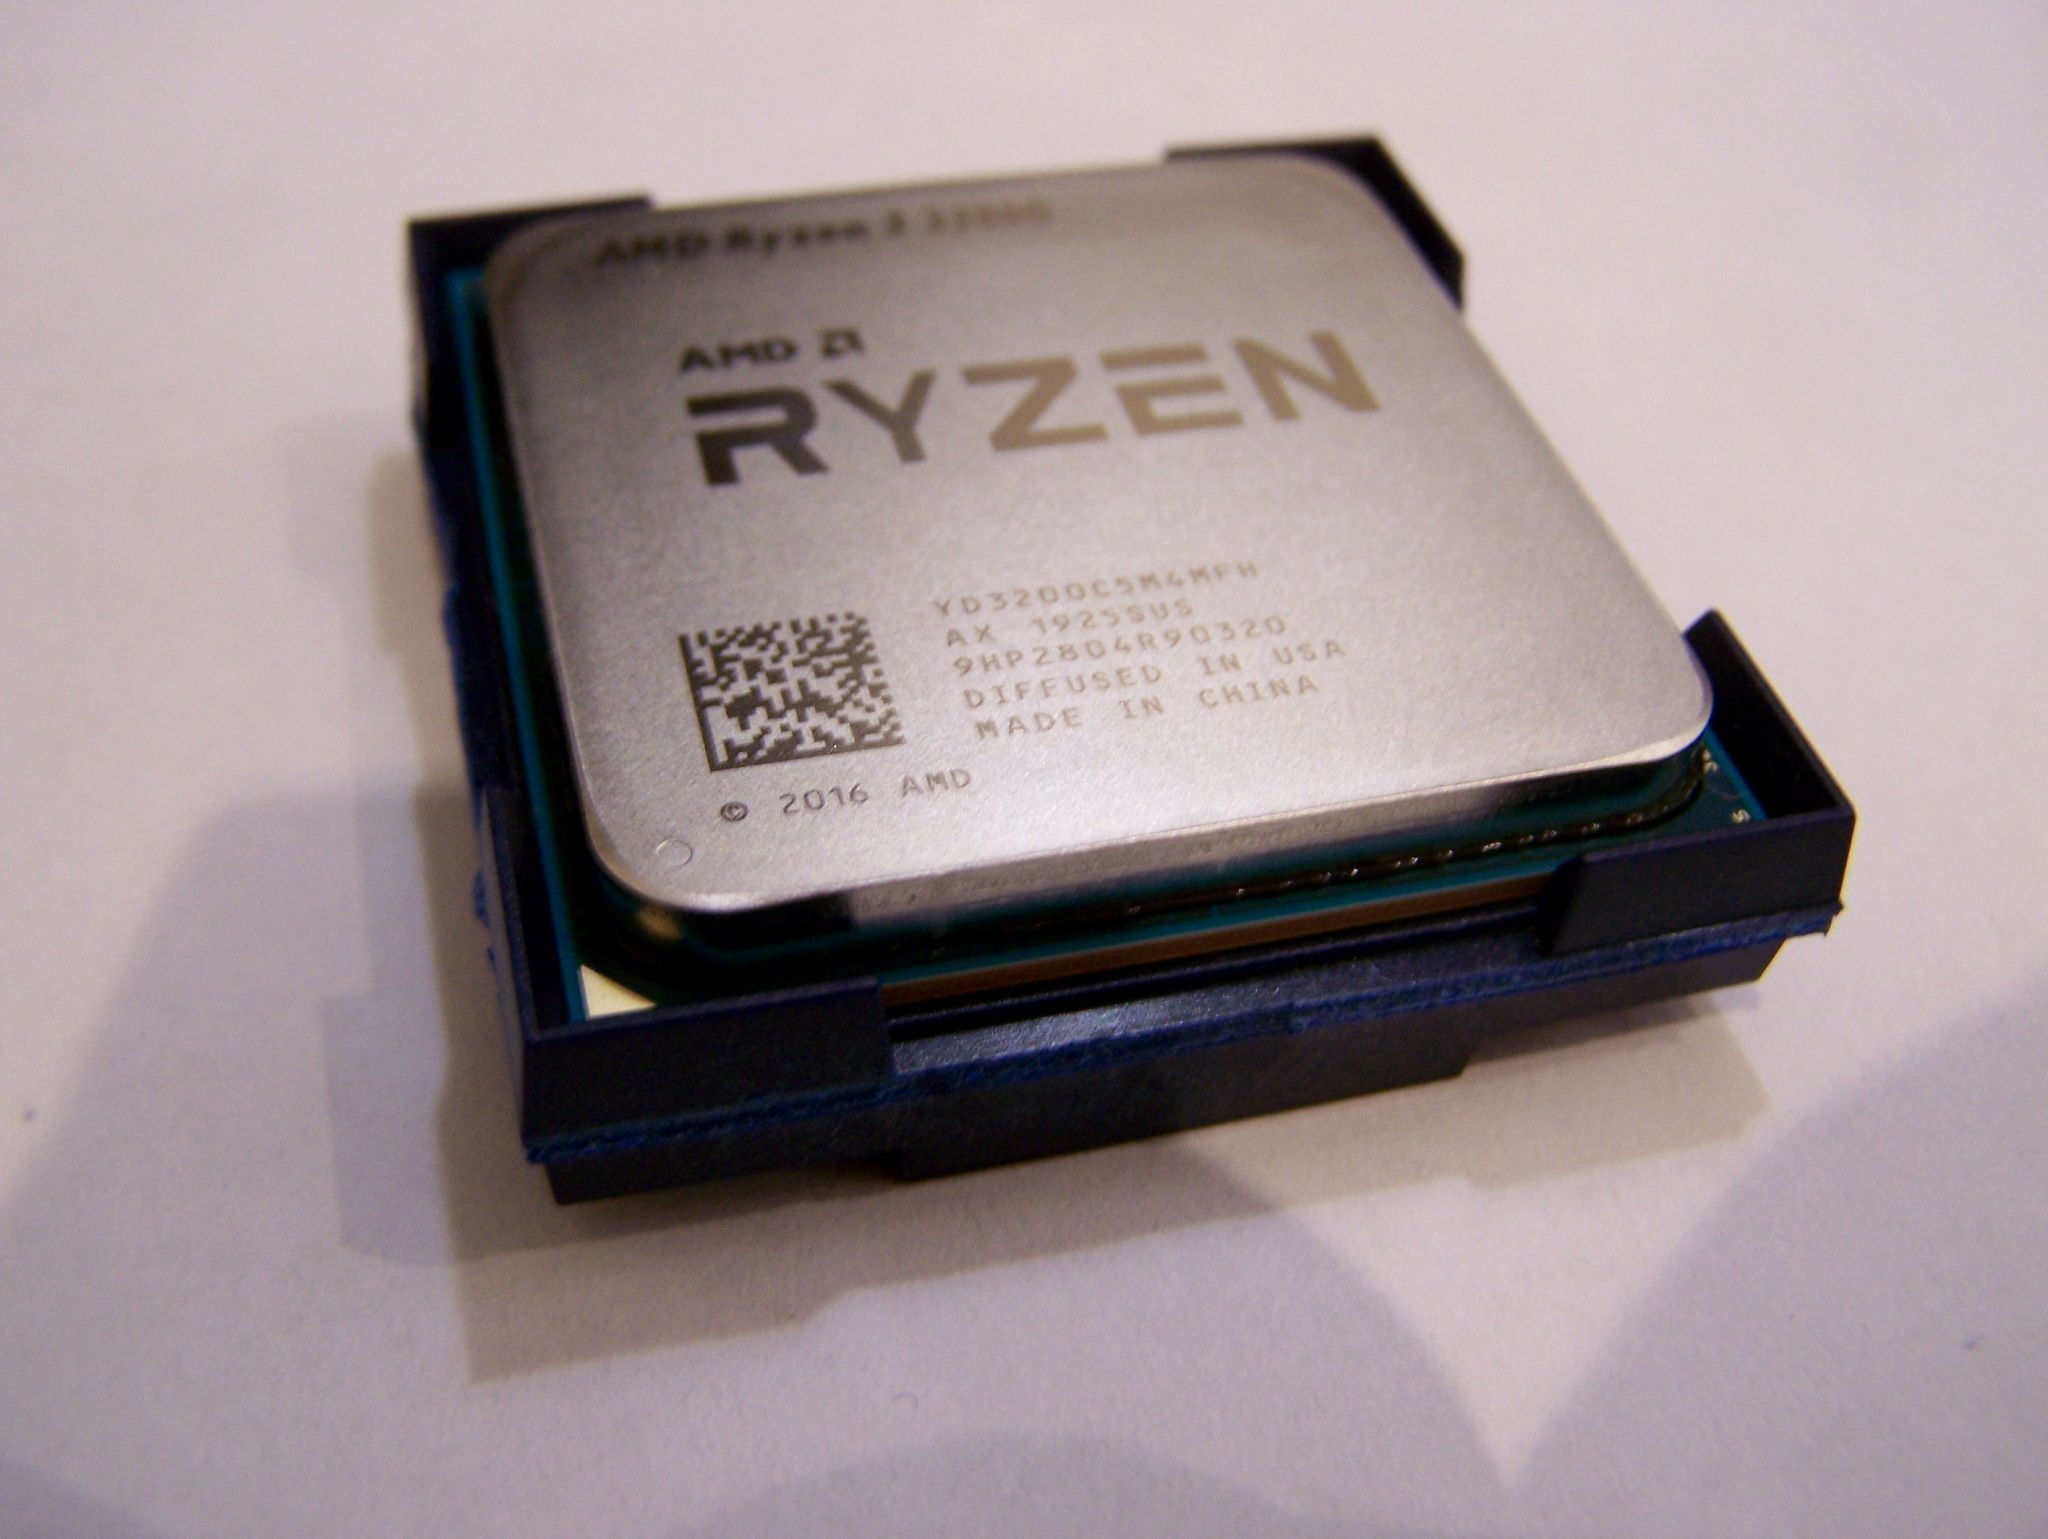 3 pro 3200g. AMD Ryzen 3 3200g. Процессор AMD Ryzen 3 3200g OEM. AMD Ryzen 3 3200g Box. AMD Ryzen 3 Pro 3200g.